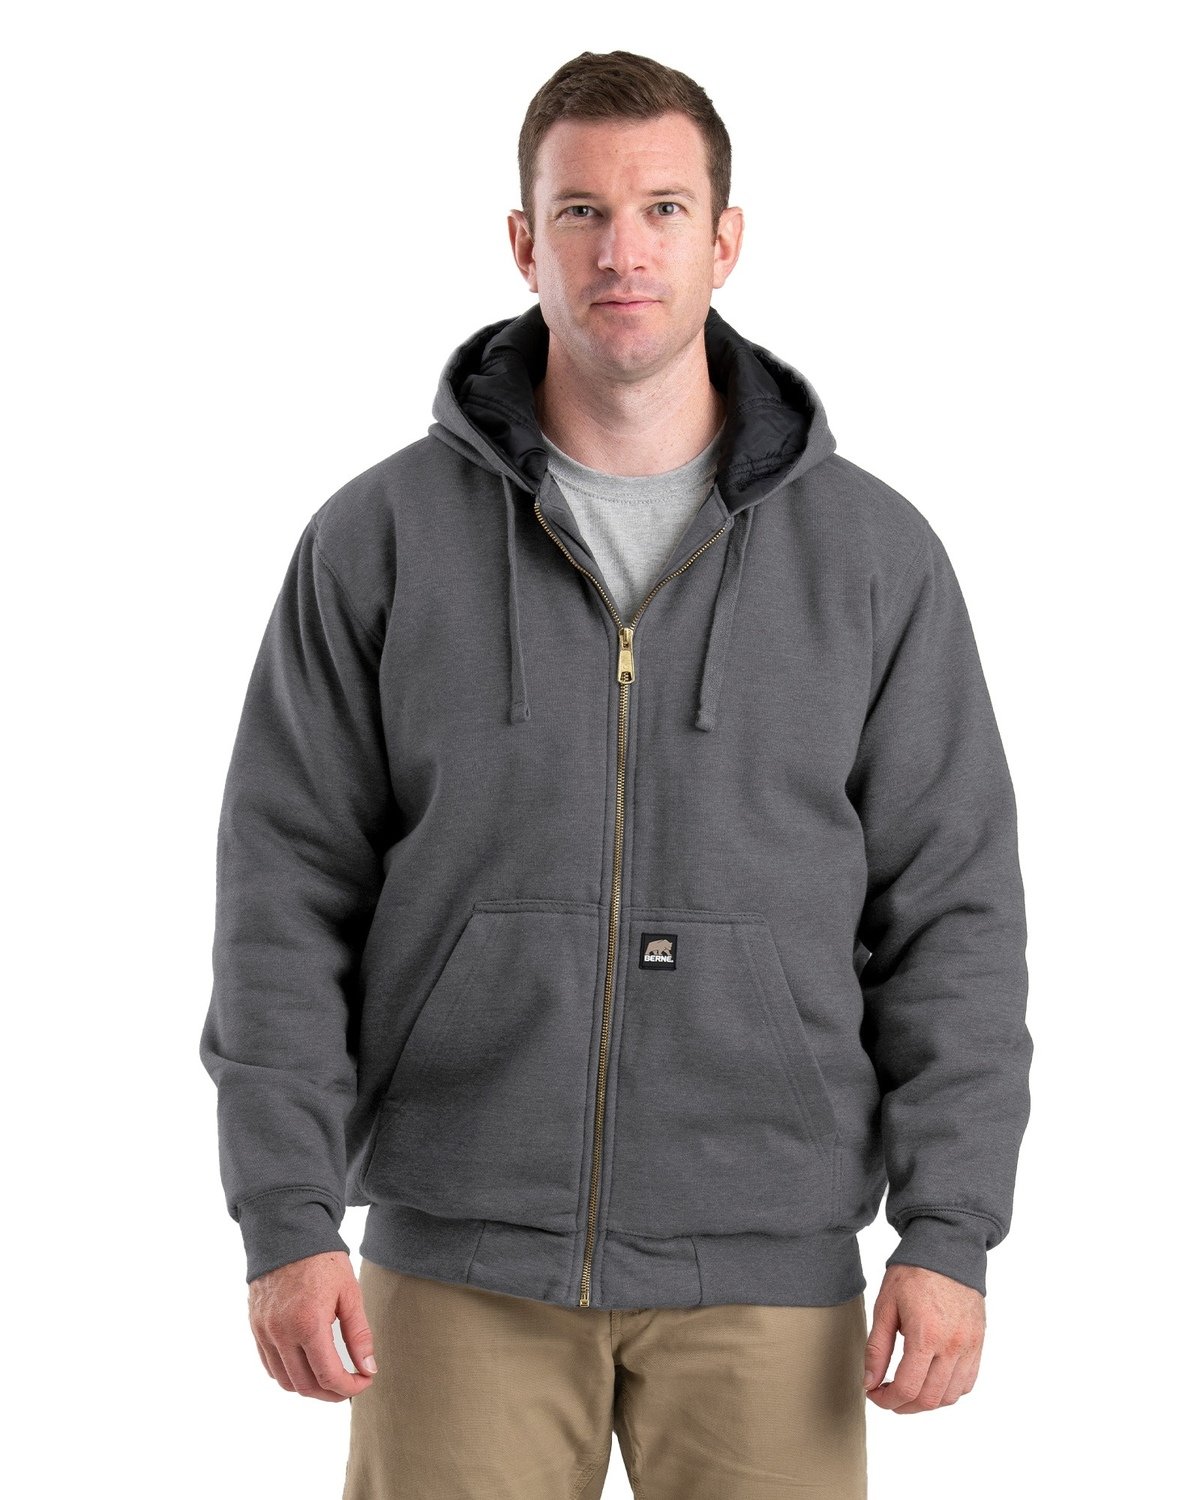 Buy Mens Glacier Full-Zip Hooded Jacket - Berne Online at Best price - NJ